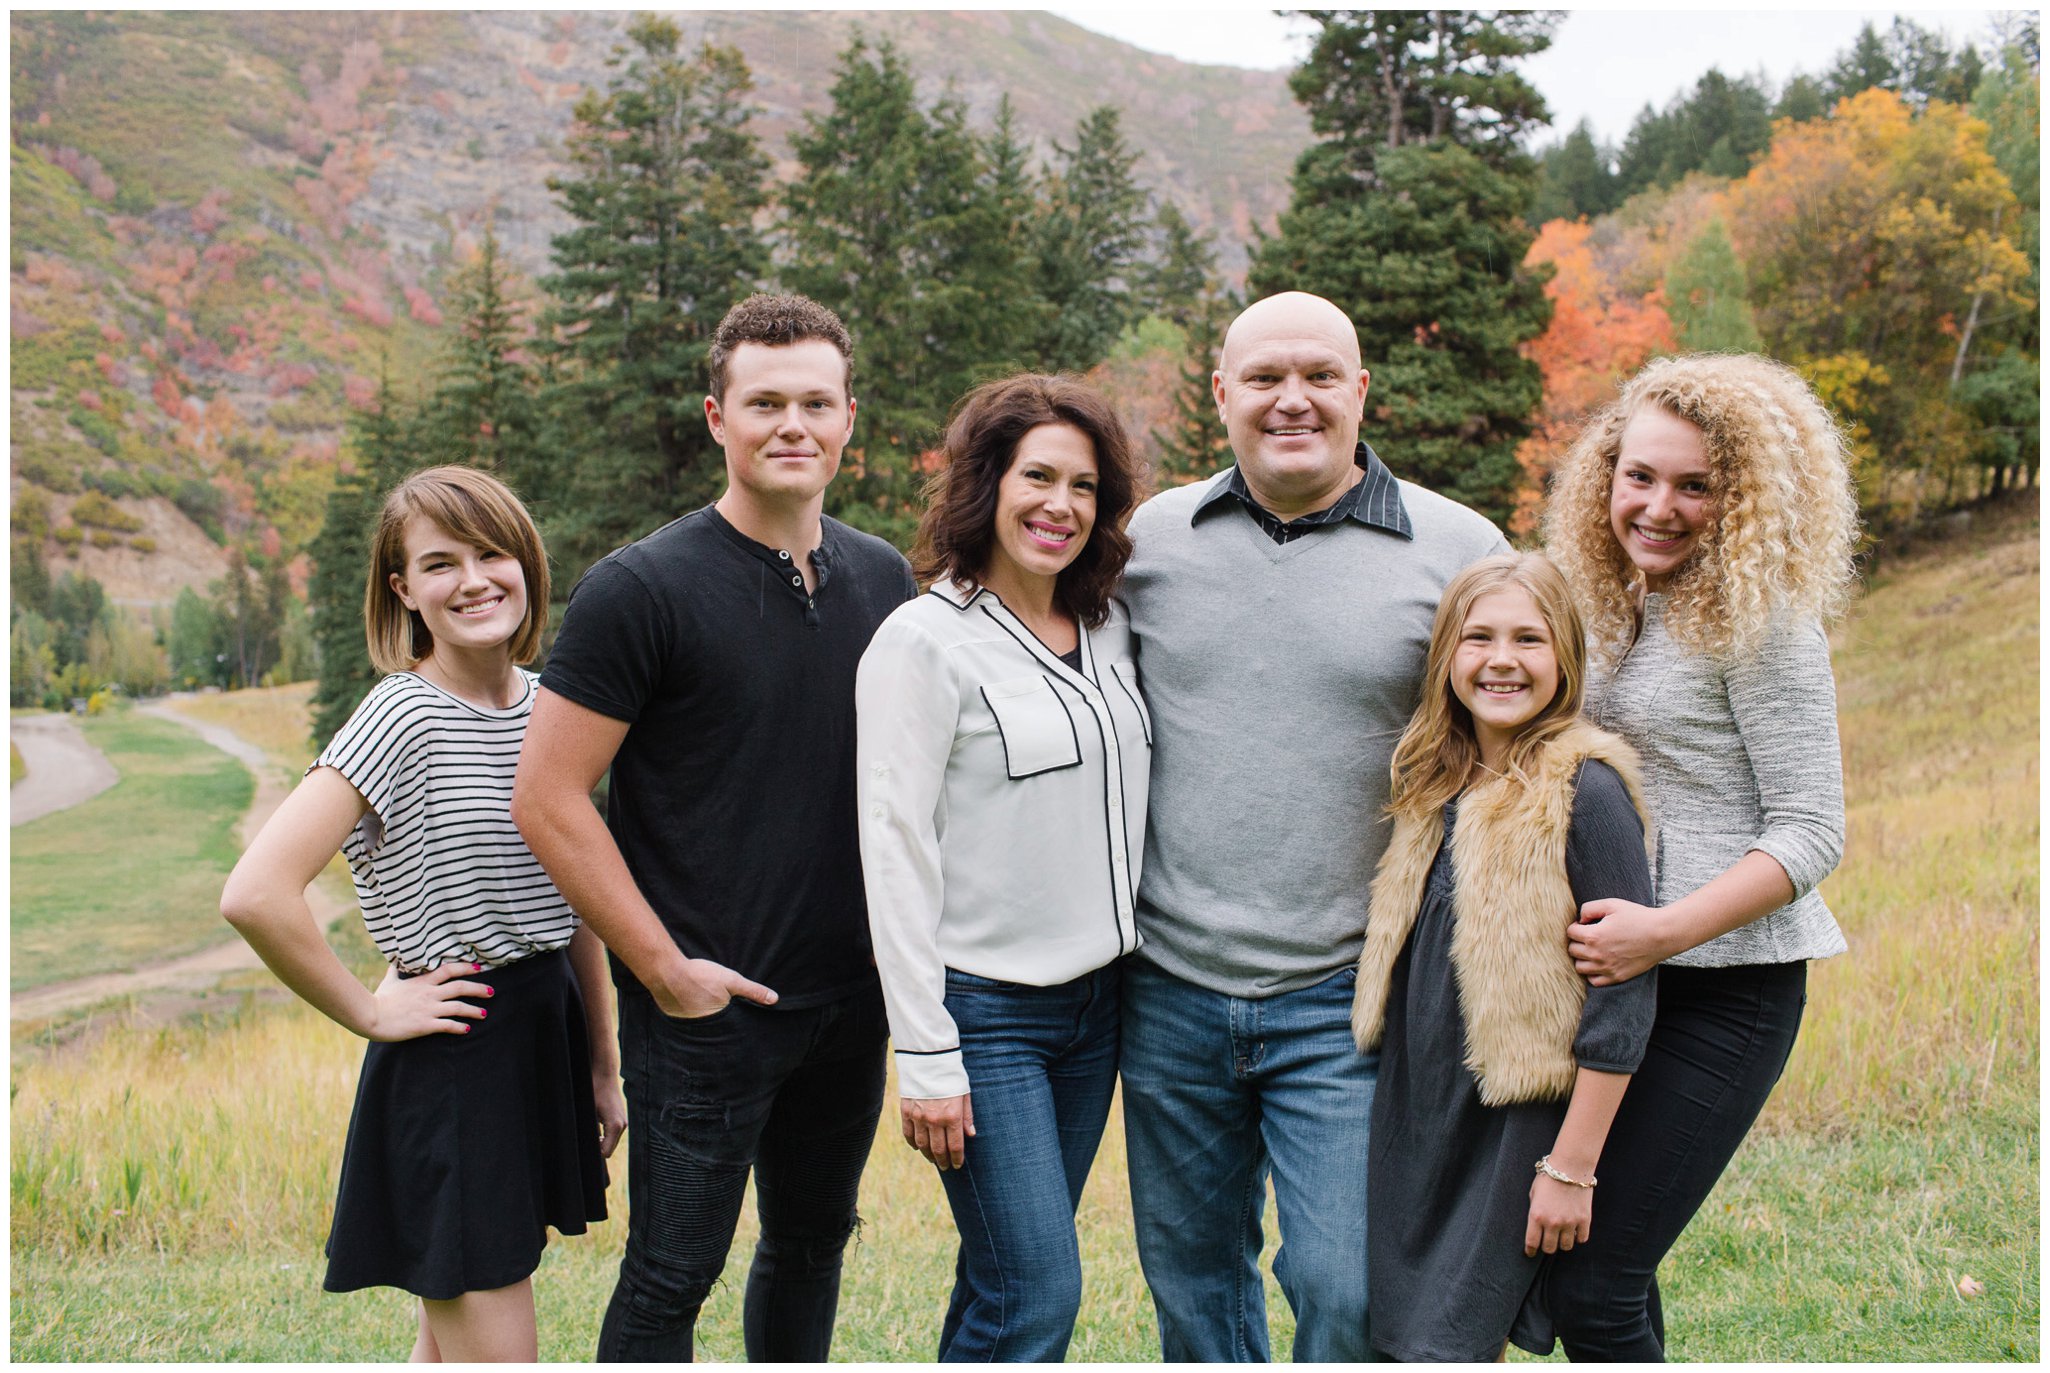 Jamie Tervort Photography | Merrill Family | Utah Family Photography | Sundance Utah | Fall Pictures